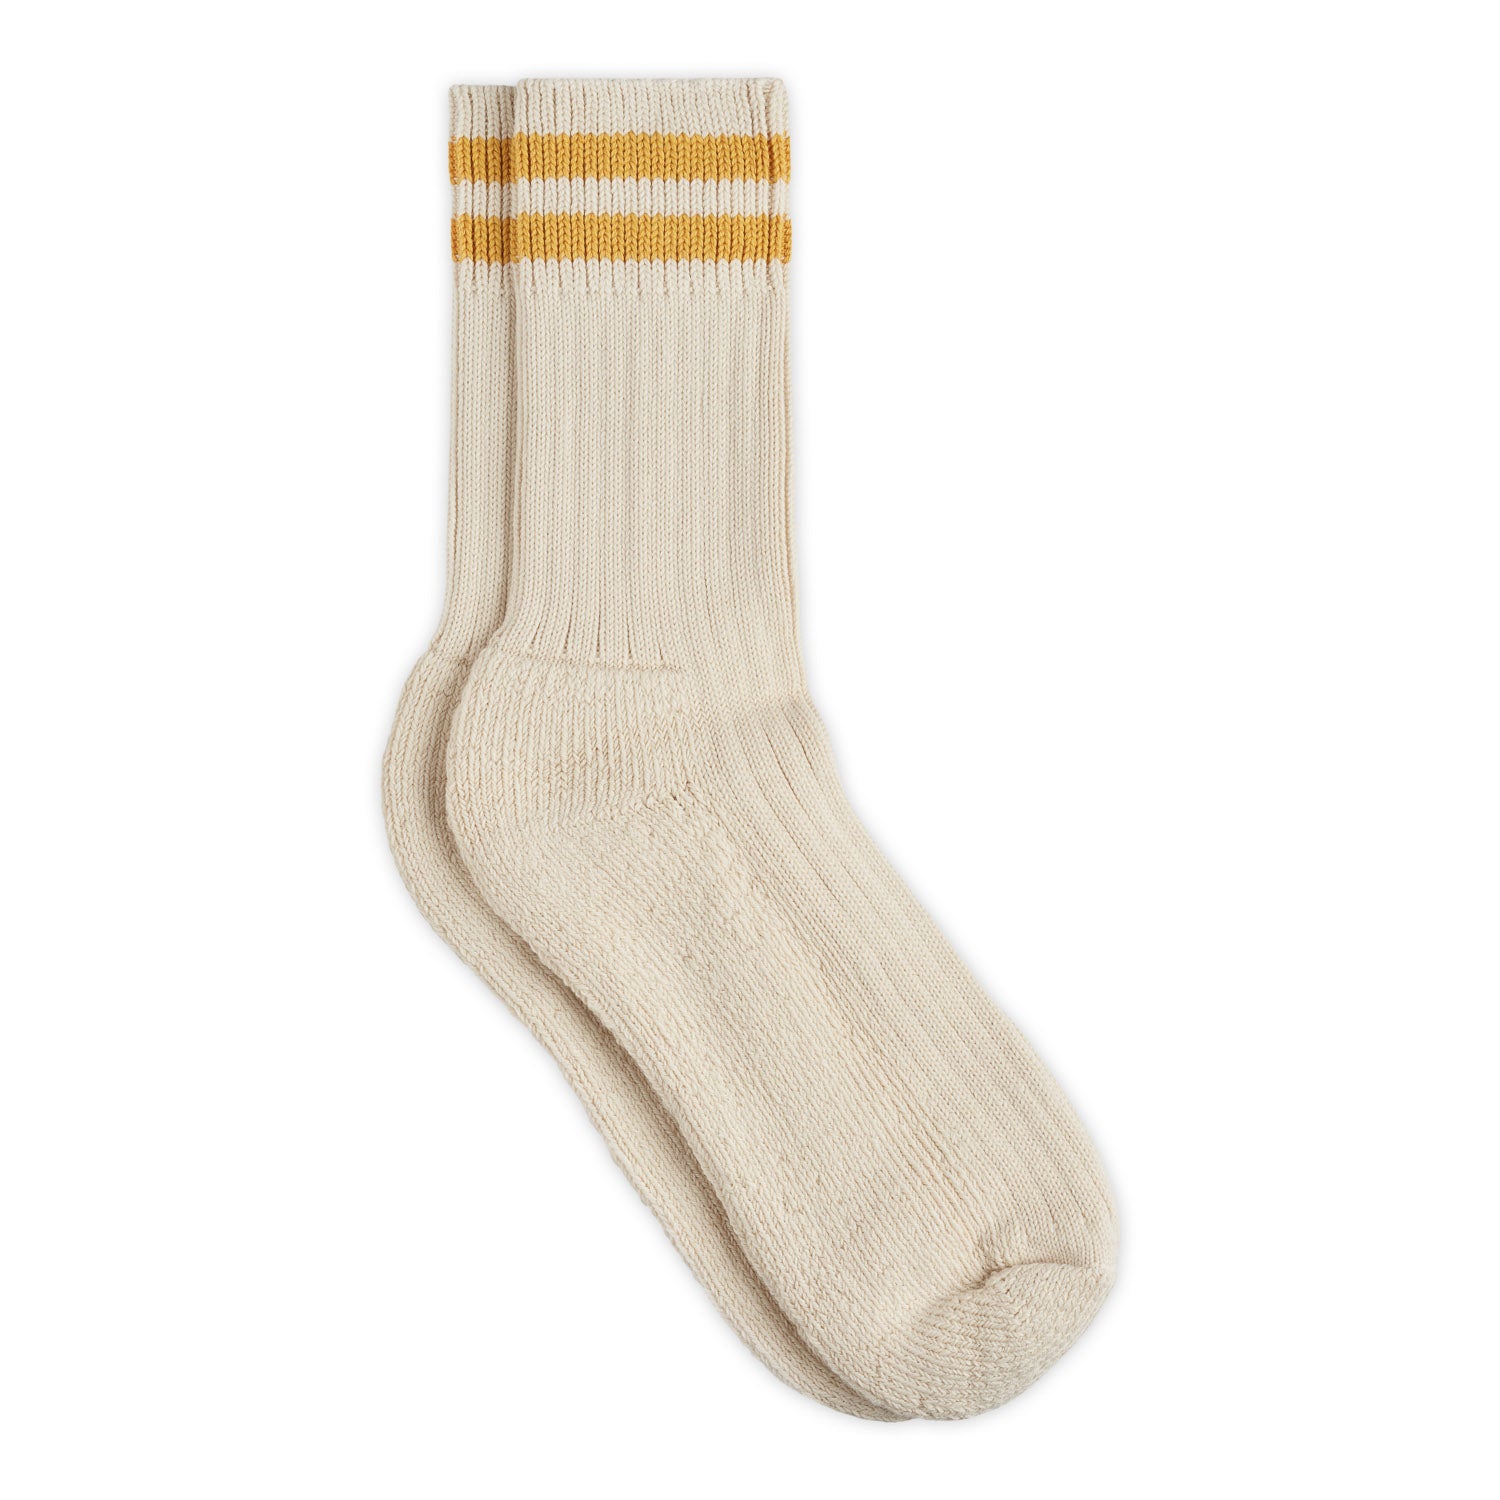 air organic cotton sport sock